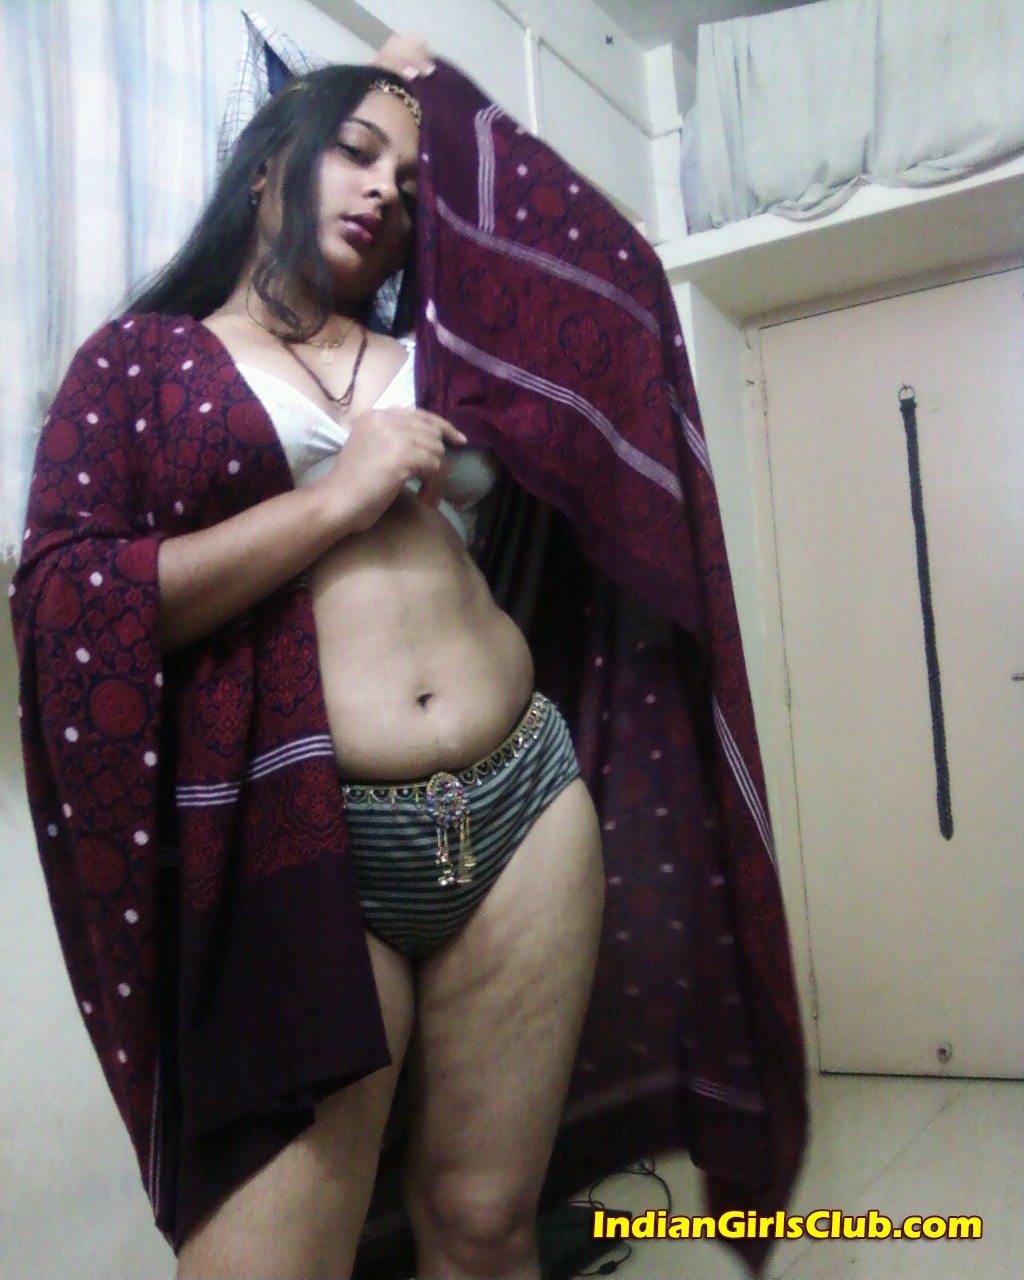 Nude Indian Lady 60 Years - cute indian girl nude p1 - Indian Girls Club - Nude Indian ...